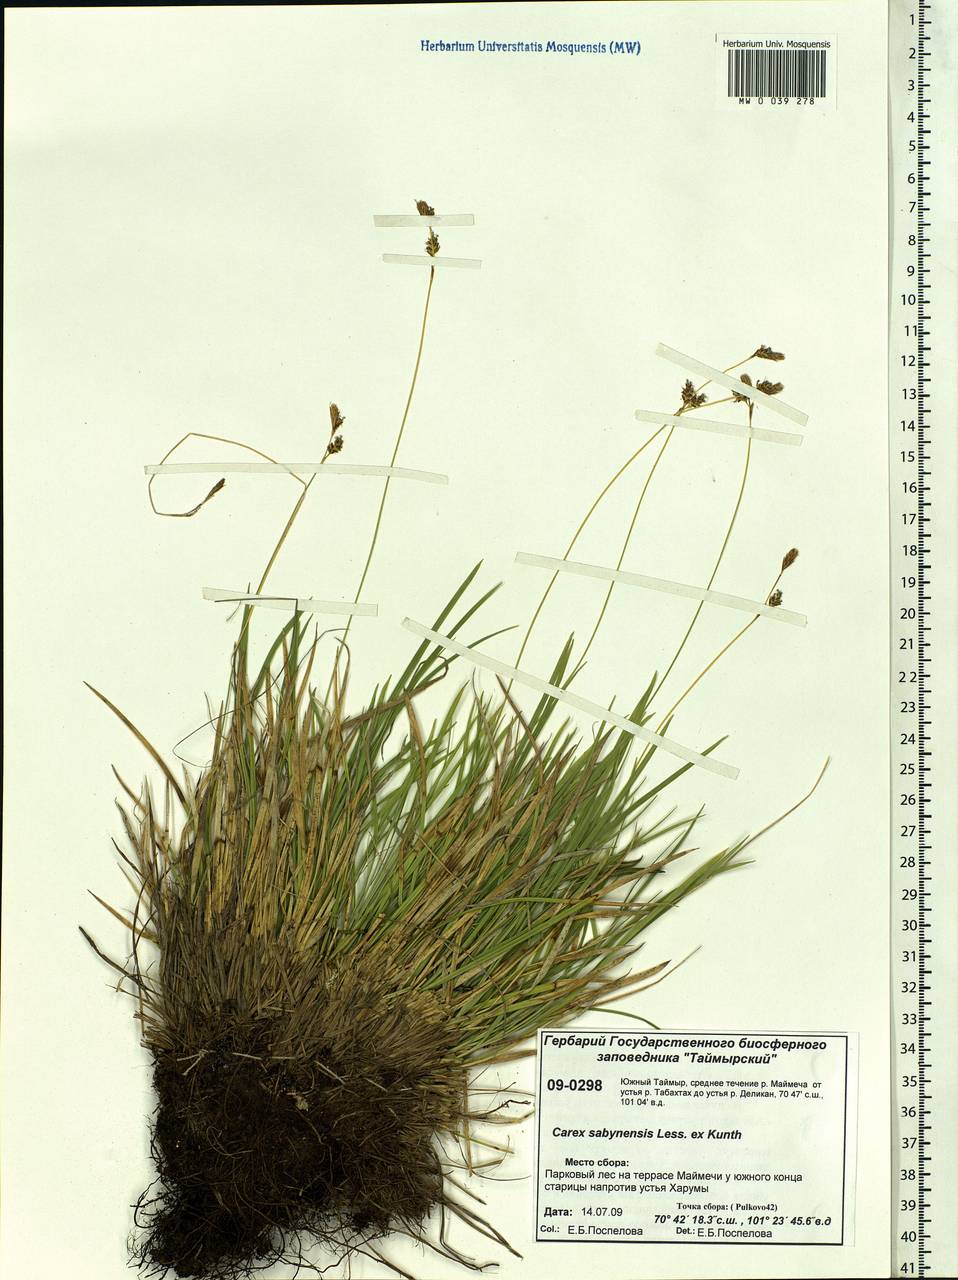 Carex umbrosa subsp. sabynensis (Less. ex Kunth) Kük., Siberia, Central Siberia (S3) (Russia)